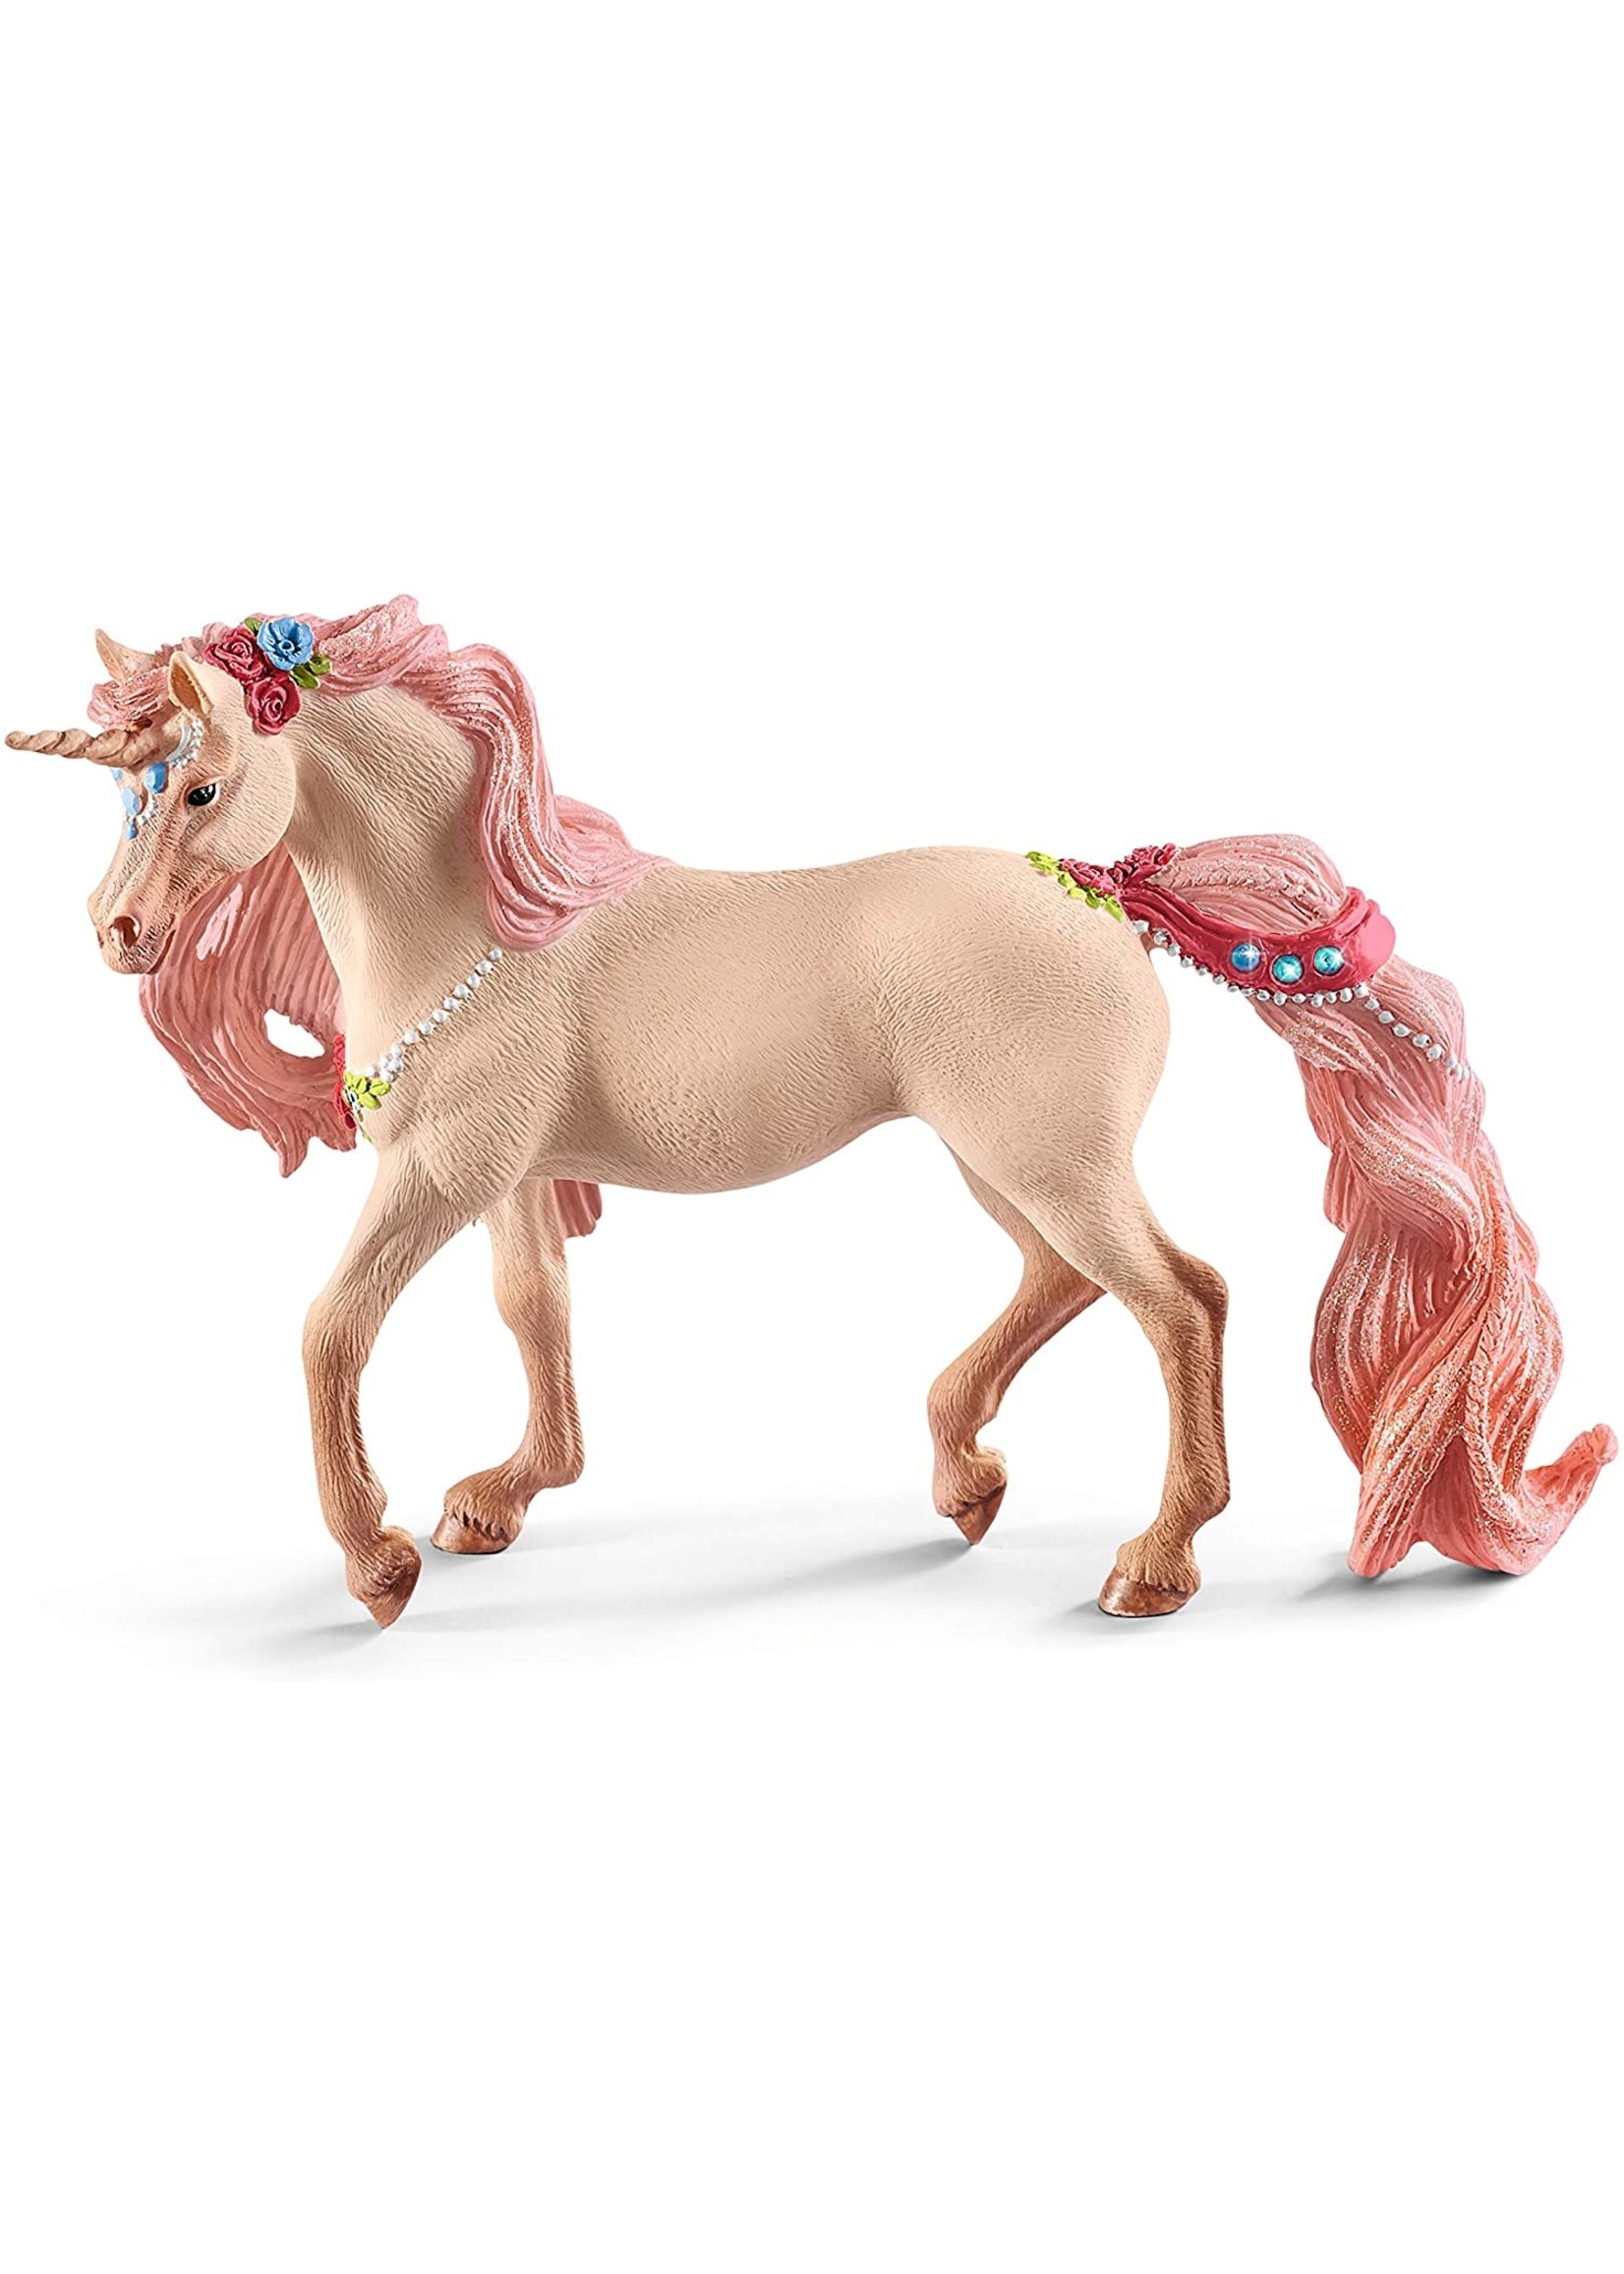 Schleich 70573 - Decorated Unicorn, Mare